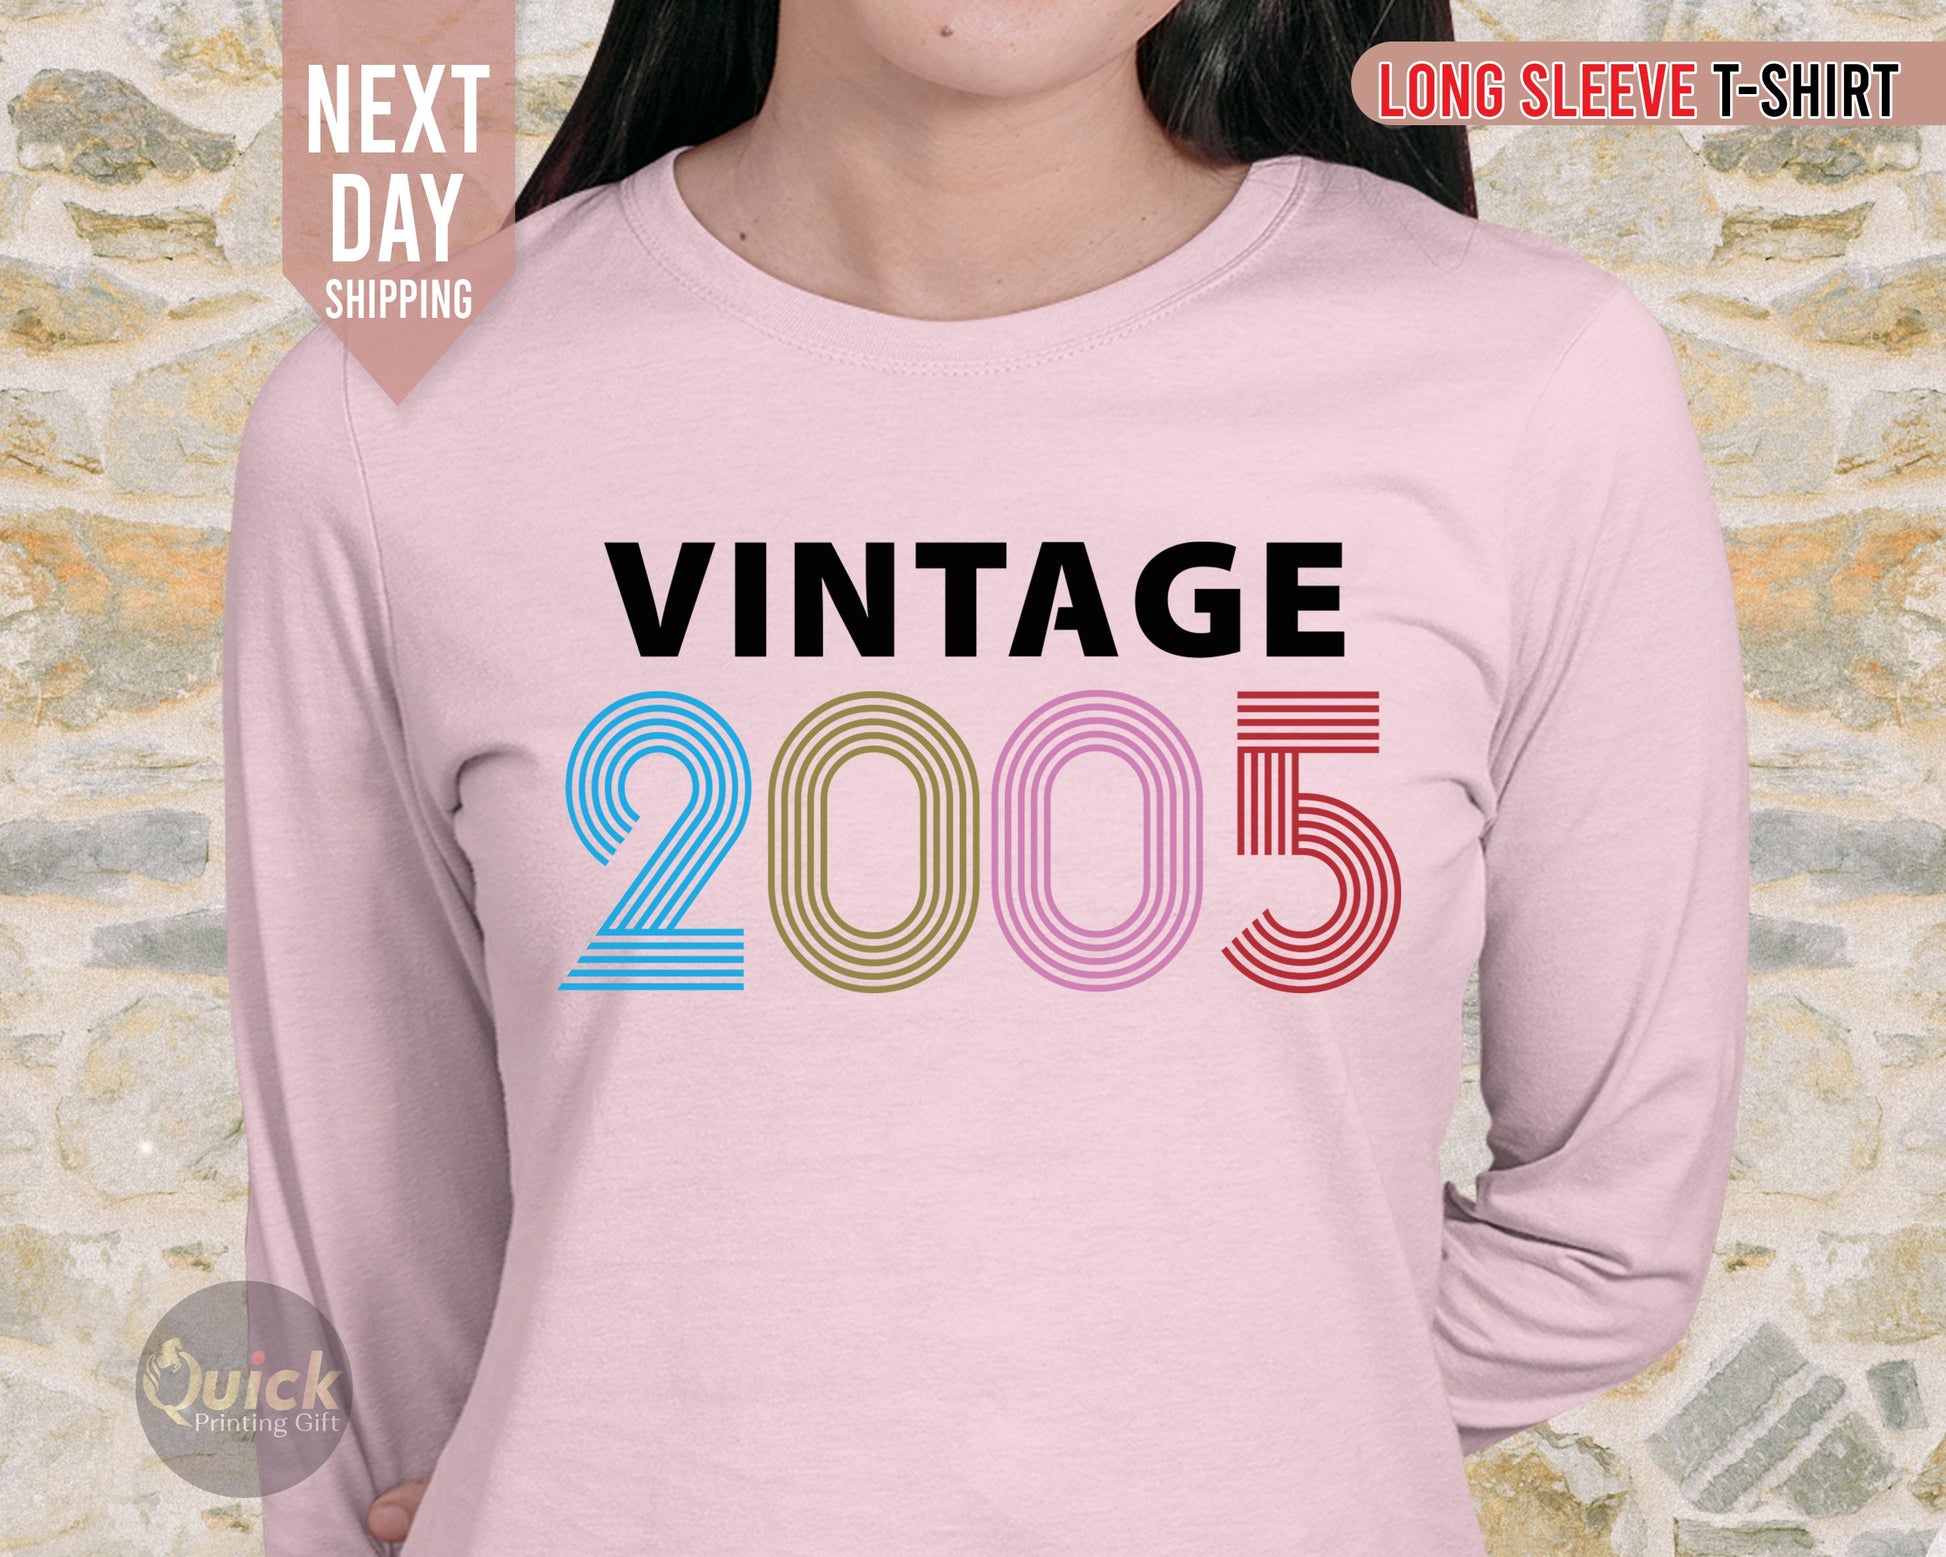 Vintage 2005 Long Sleeve Shirt